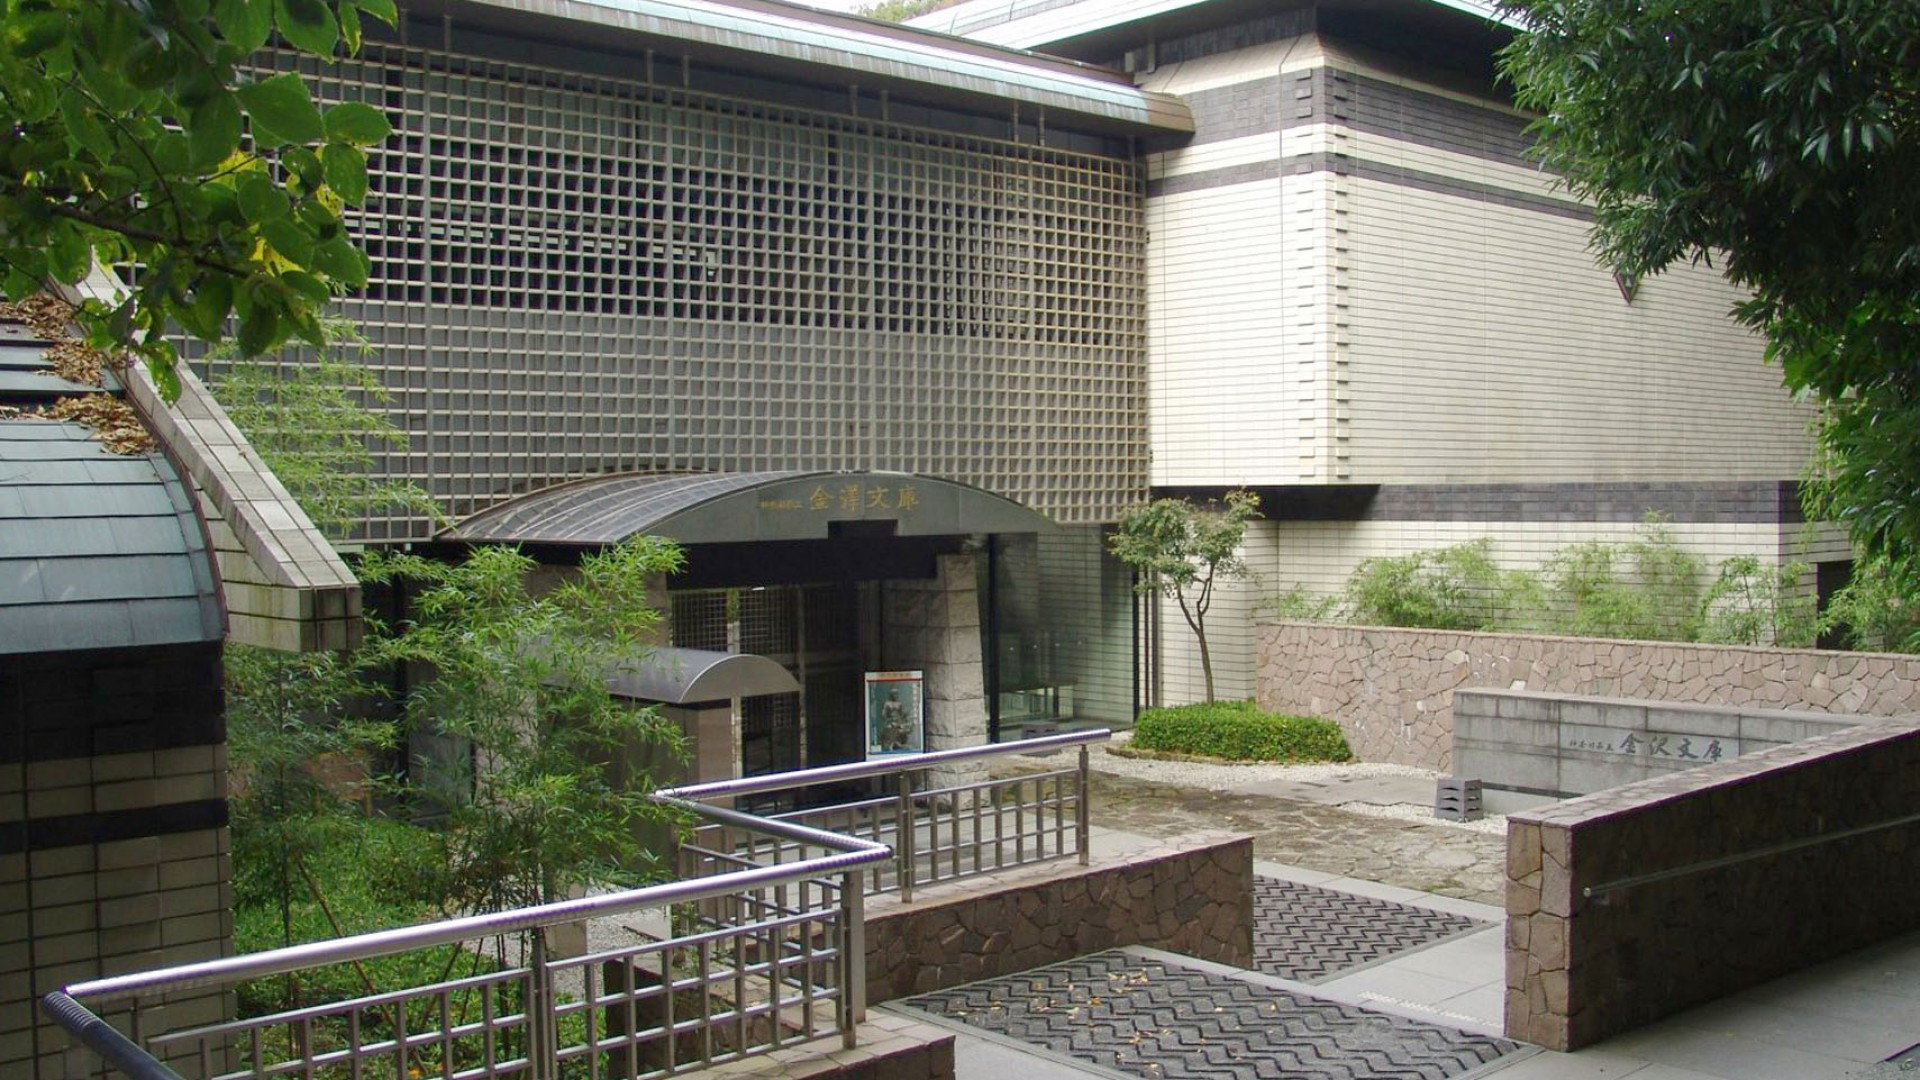 Kanagawa Prefectural Kanazawa-Bunko Museum